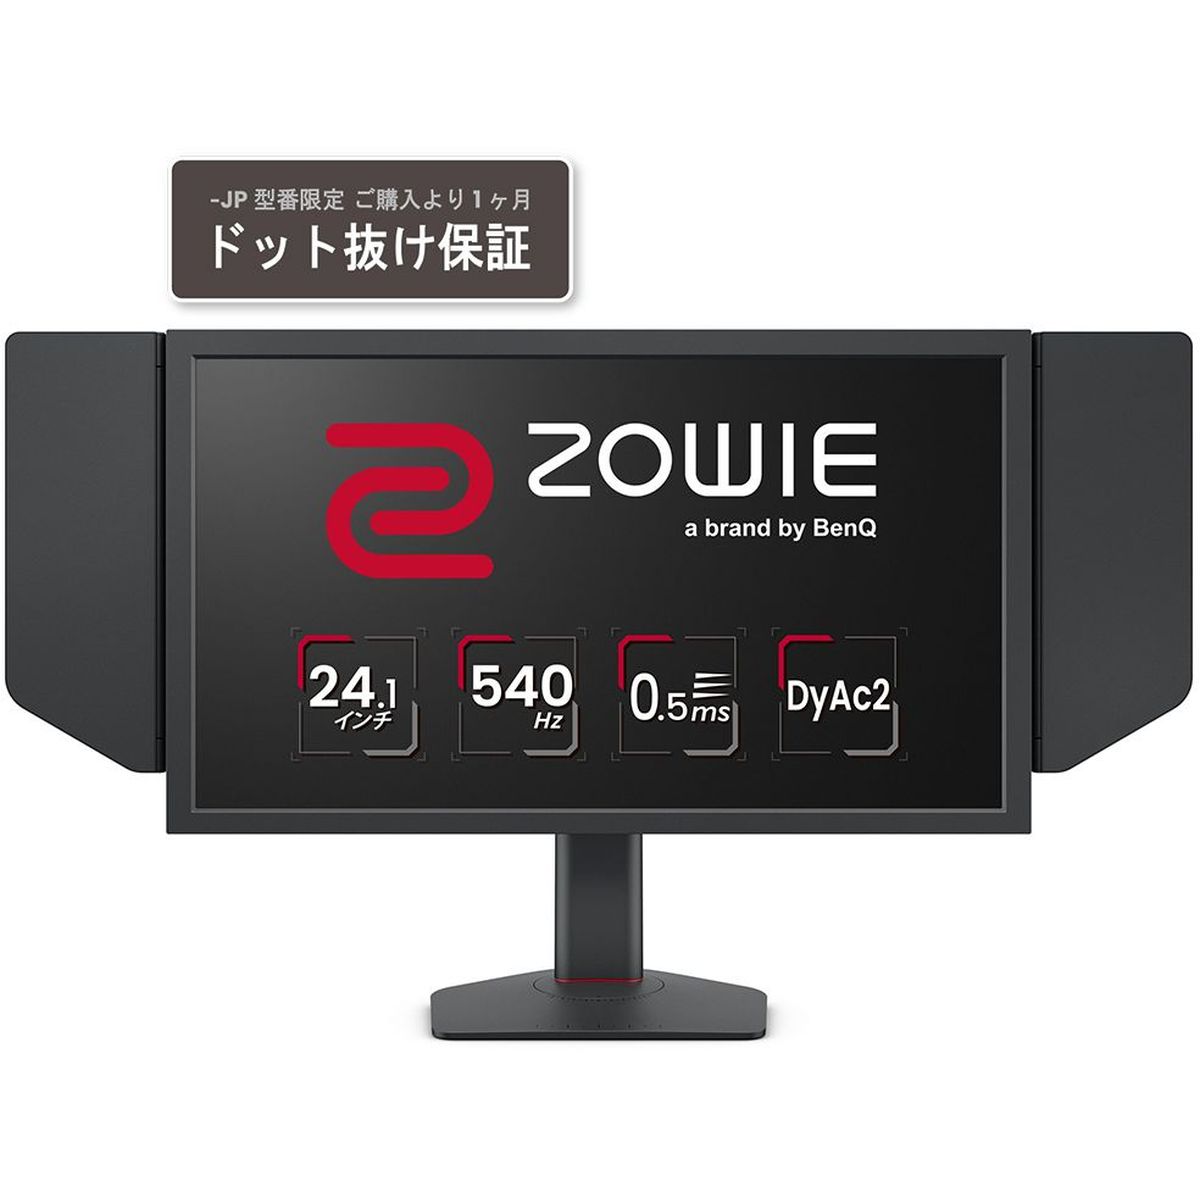 ZOWIE ゲーミング液晶ディスプレイ 24.1型/1920×1080/HDMIx3 DisplayPortx1/0.5ms/540Hz/DyAc2/ダークグレー/スピーカー無し/Black eQualizer/高さ・角度調整/S.Switch